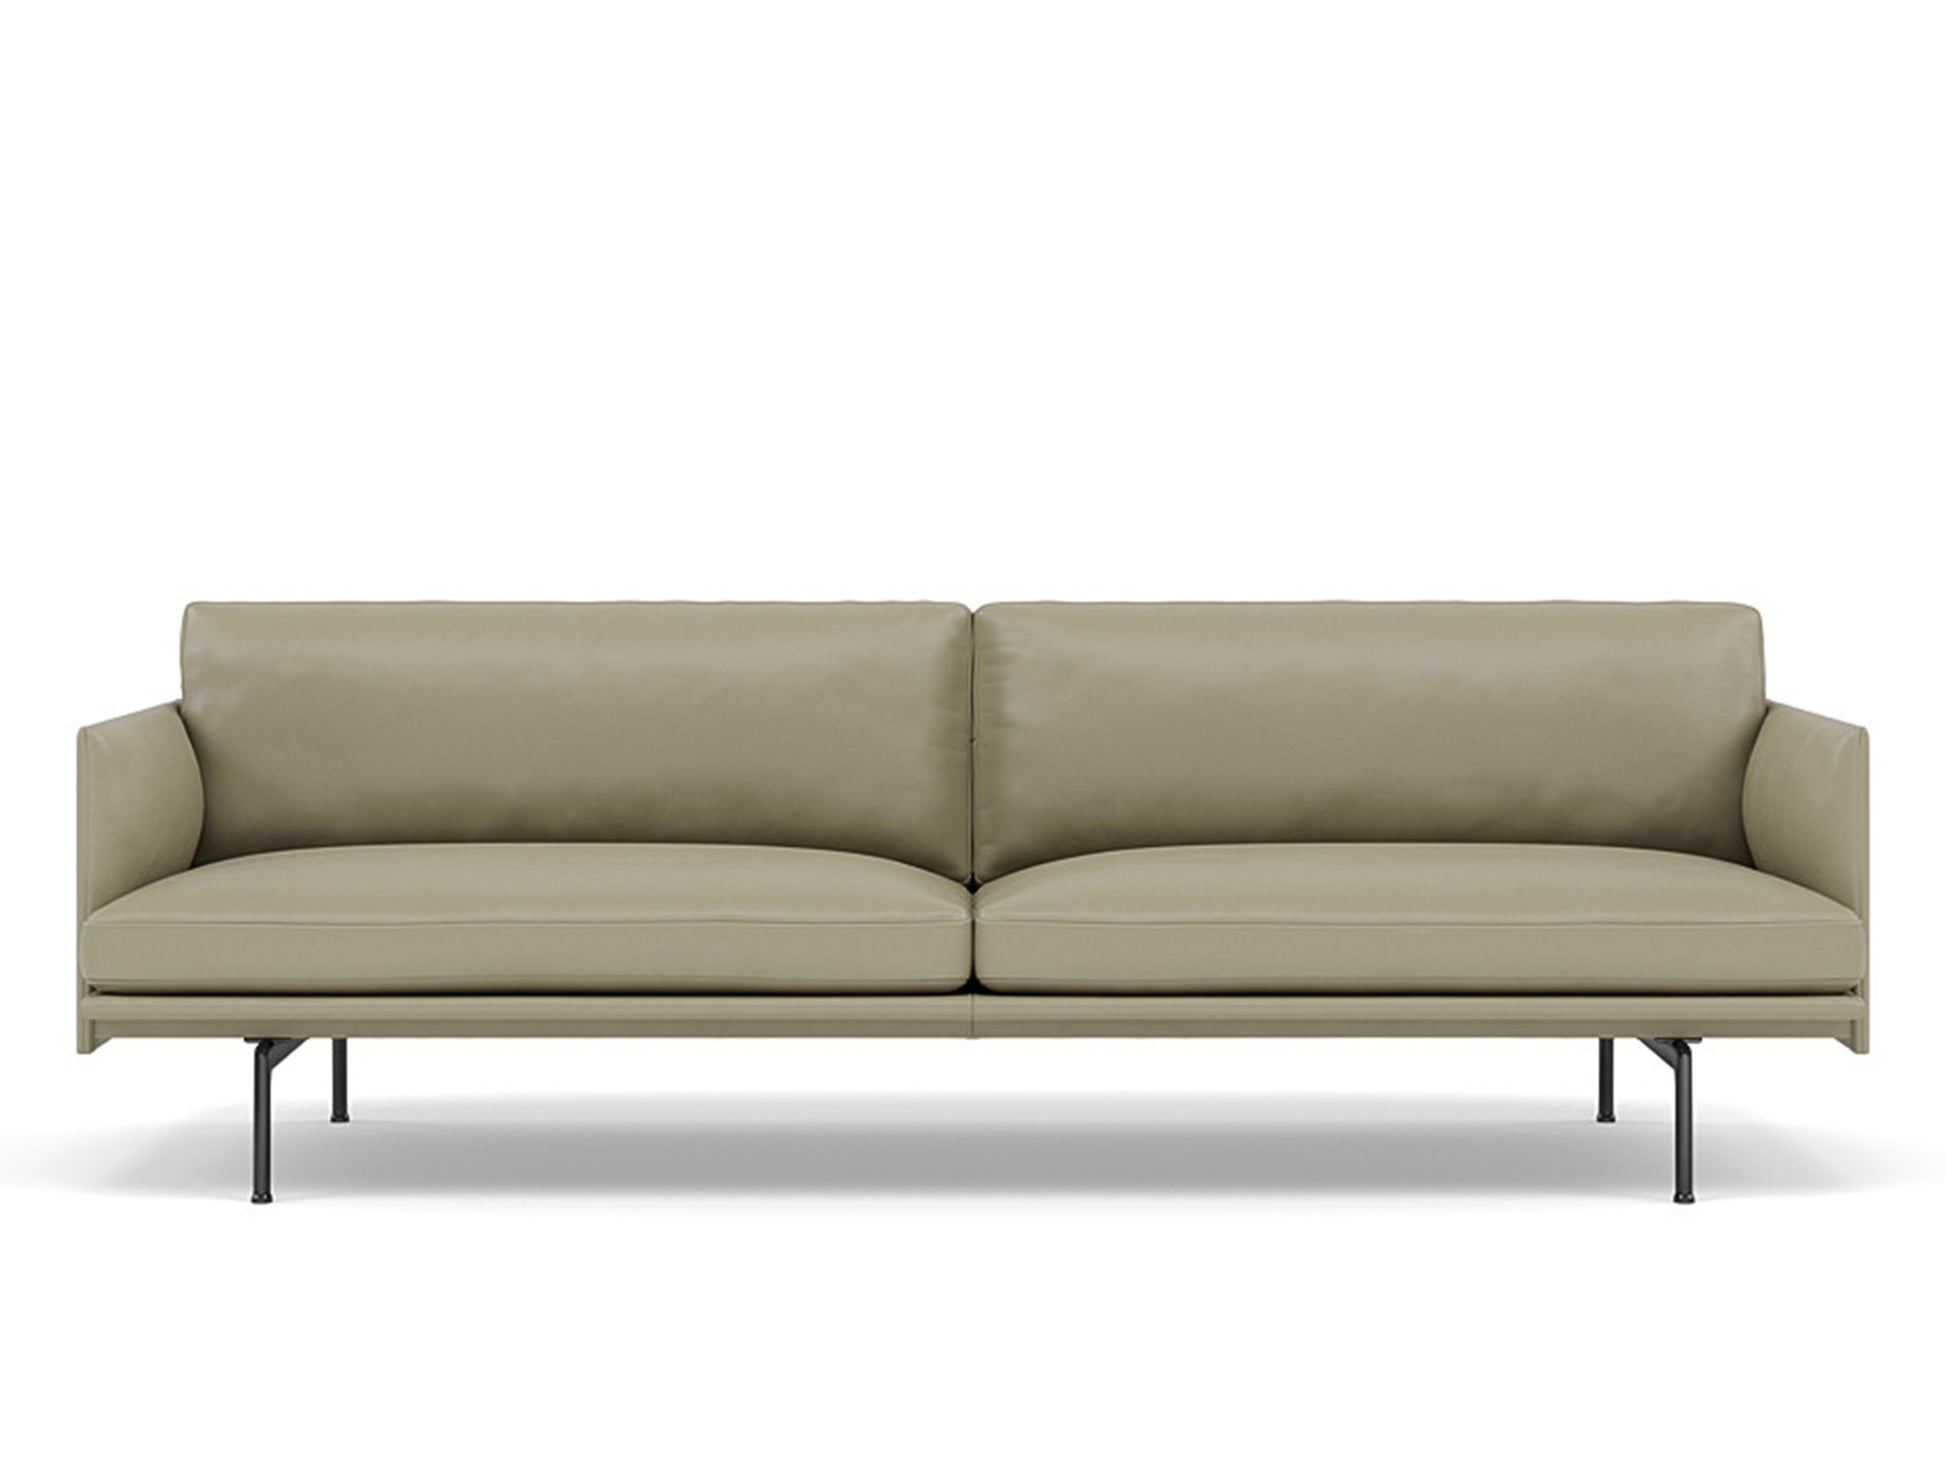 Muuto Outline 3 Seater Sofa - Black Aluminium Base / stone silk leather